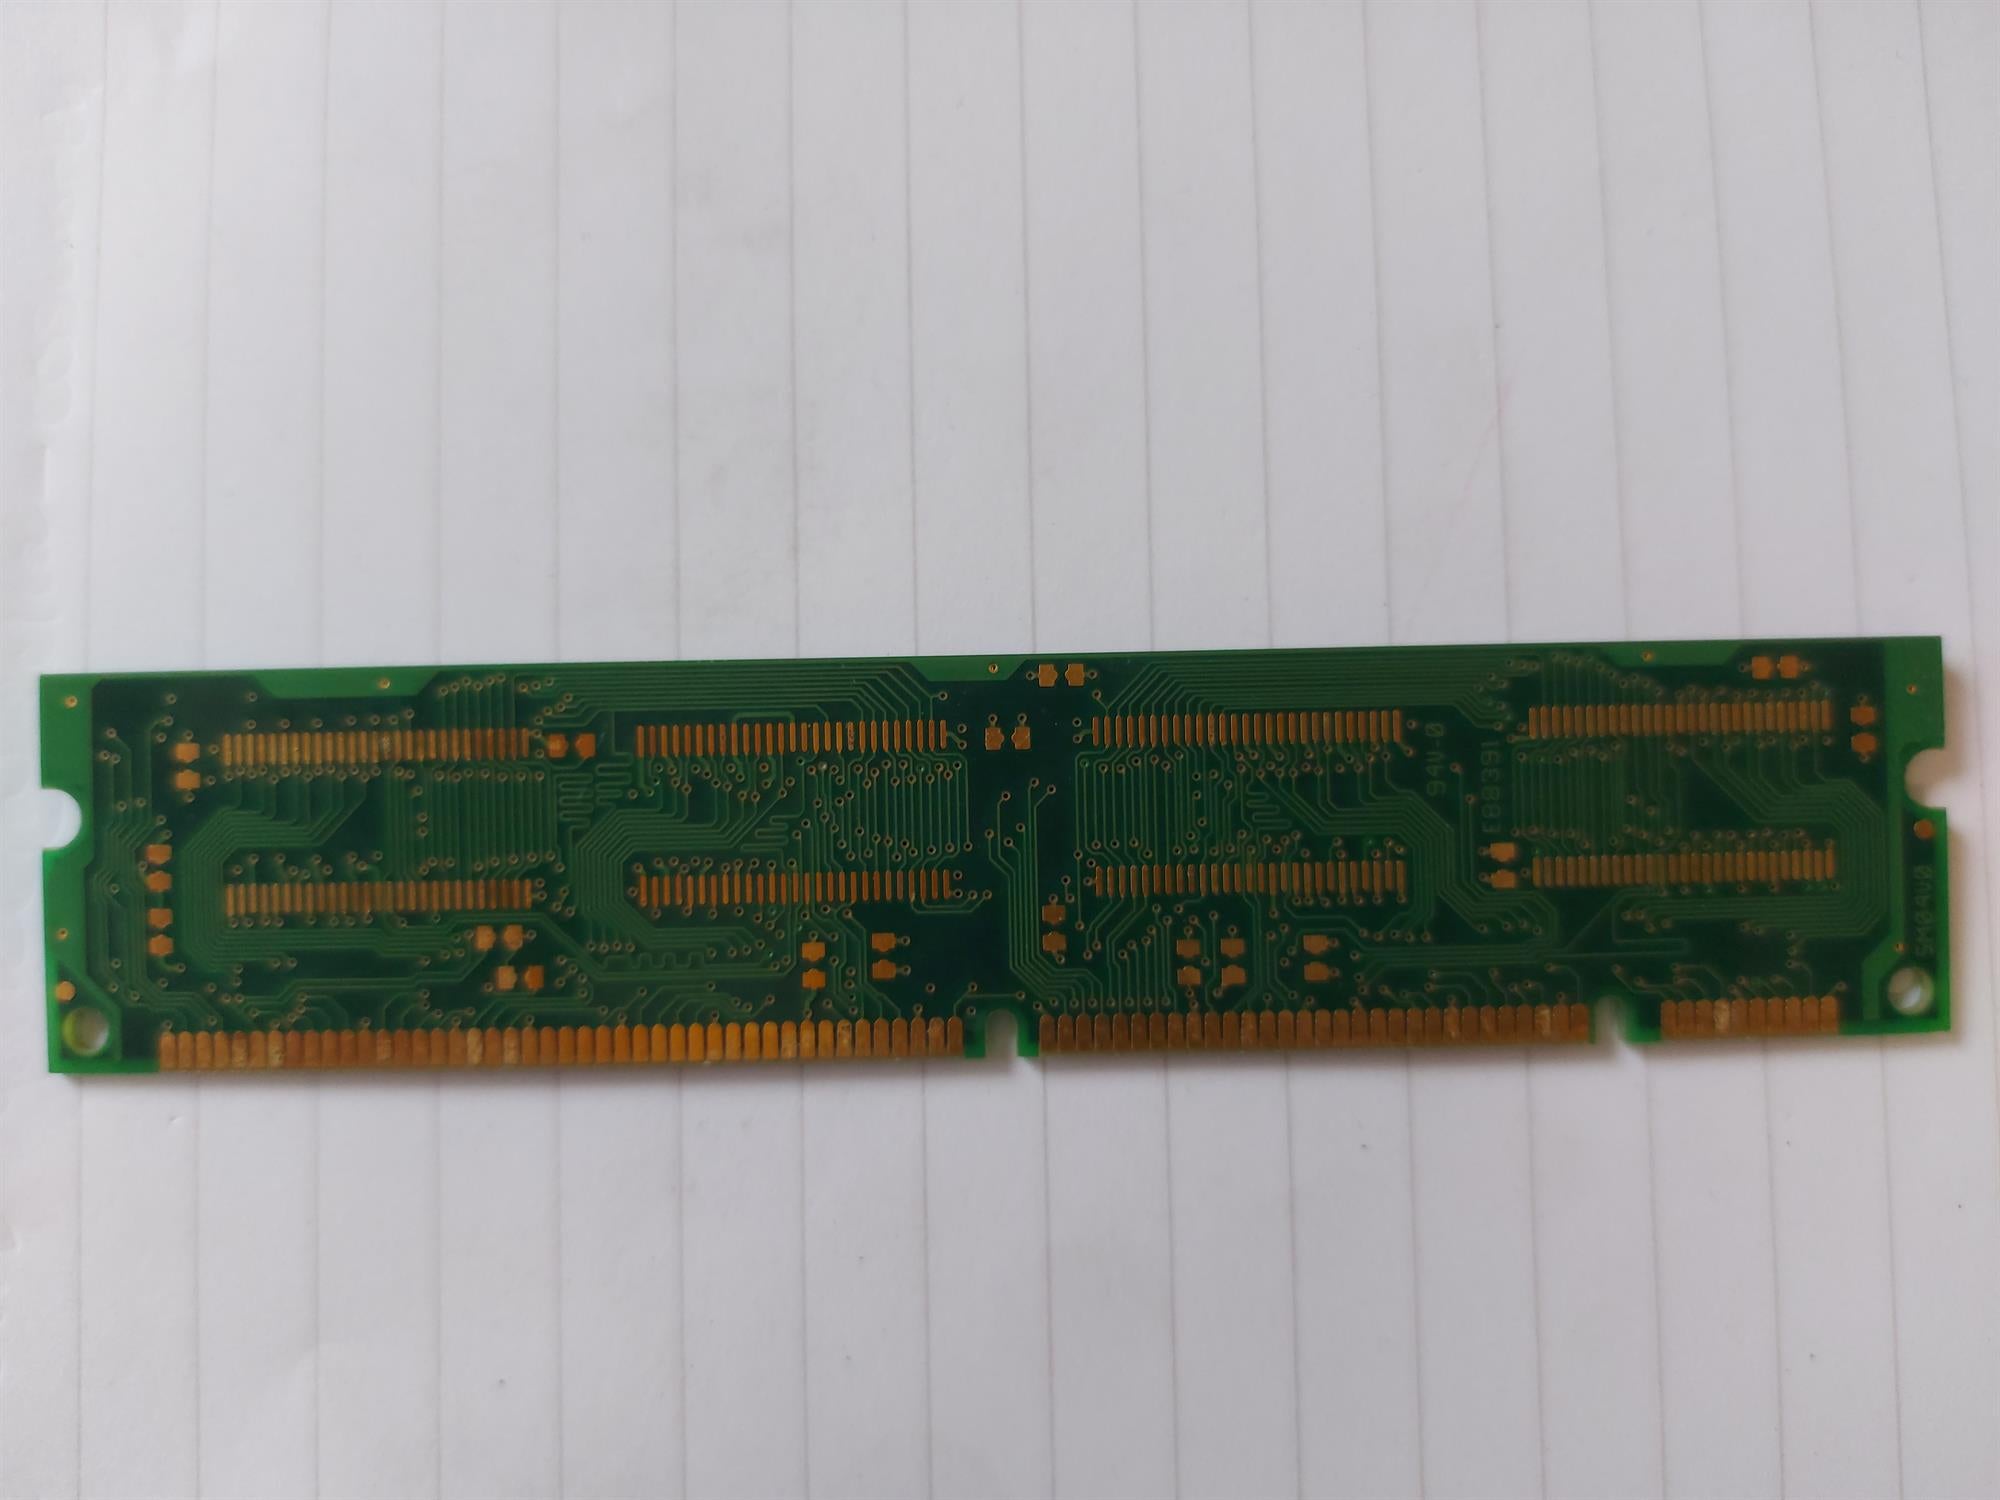 32MB PC66 168PIN SDRAM DIMM ( DP100-064042B   Dane-Elec )